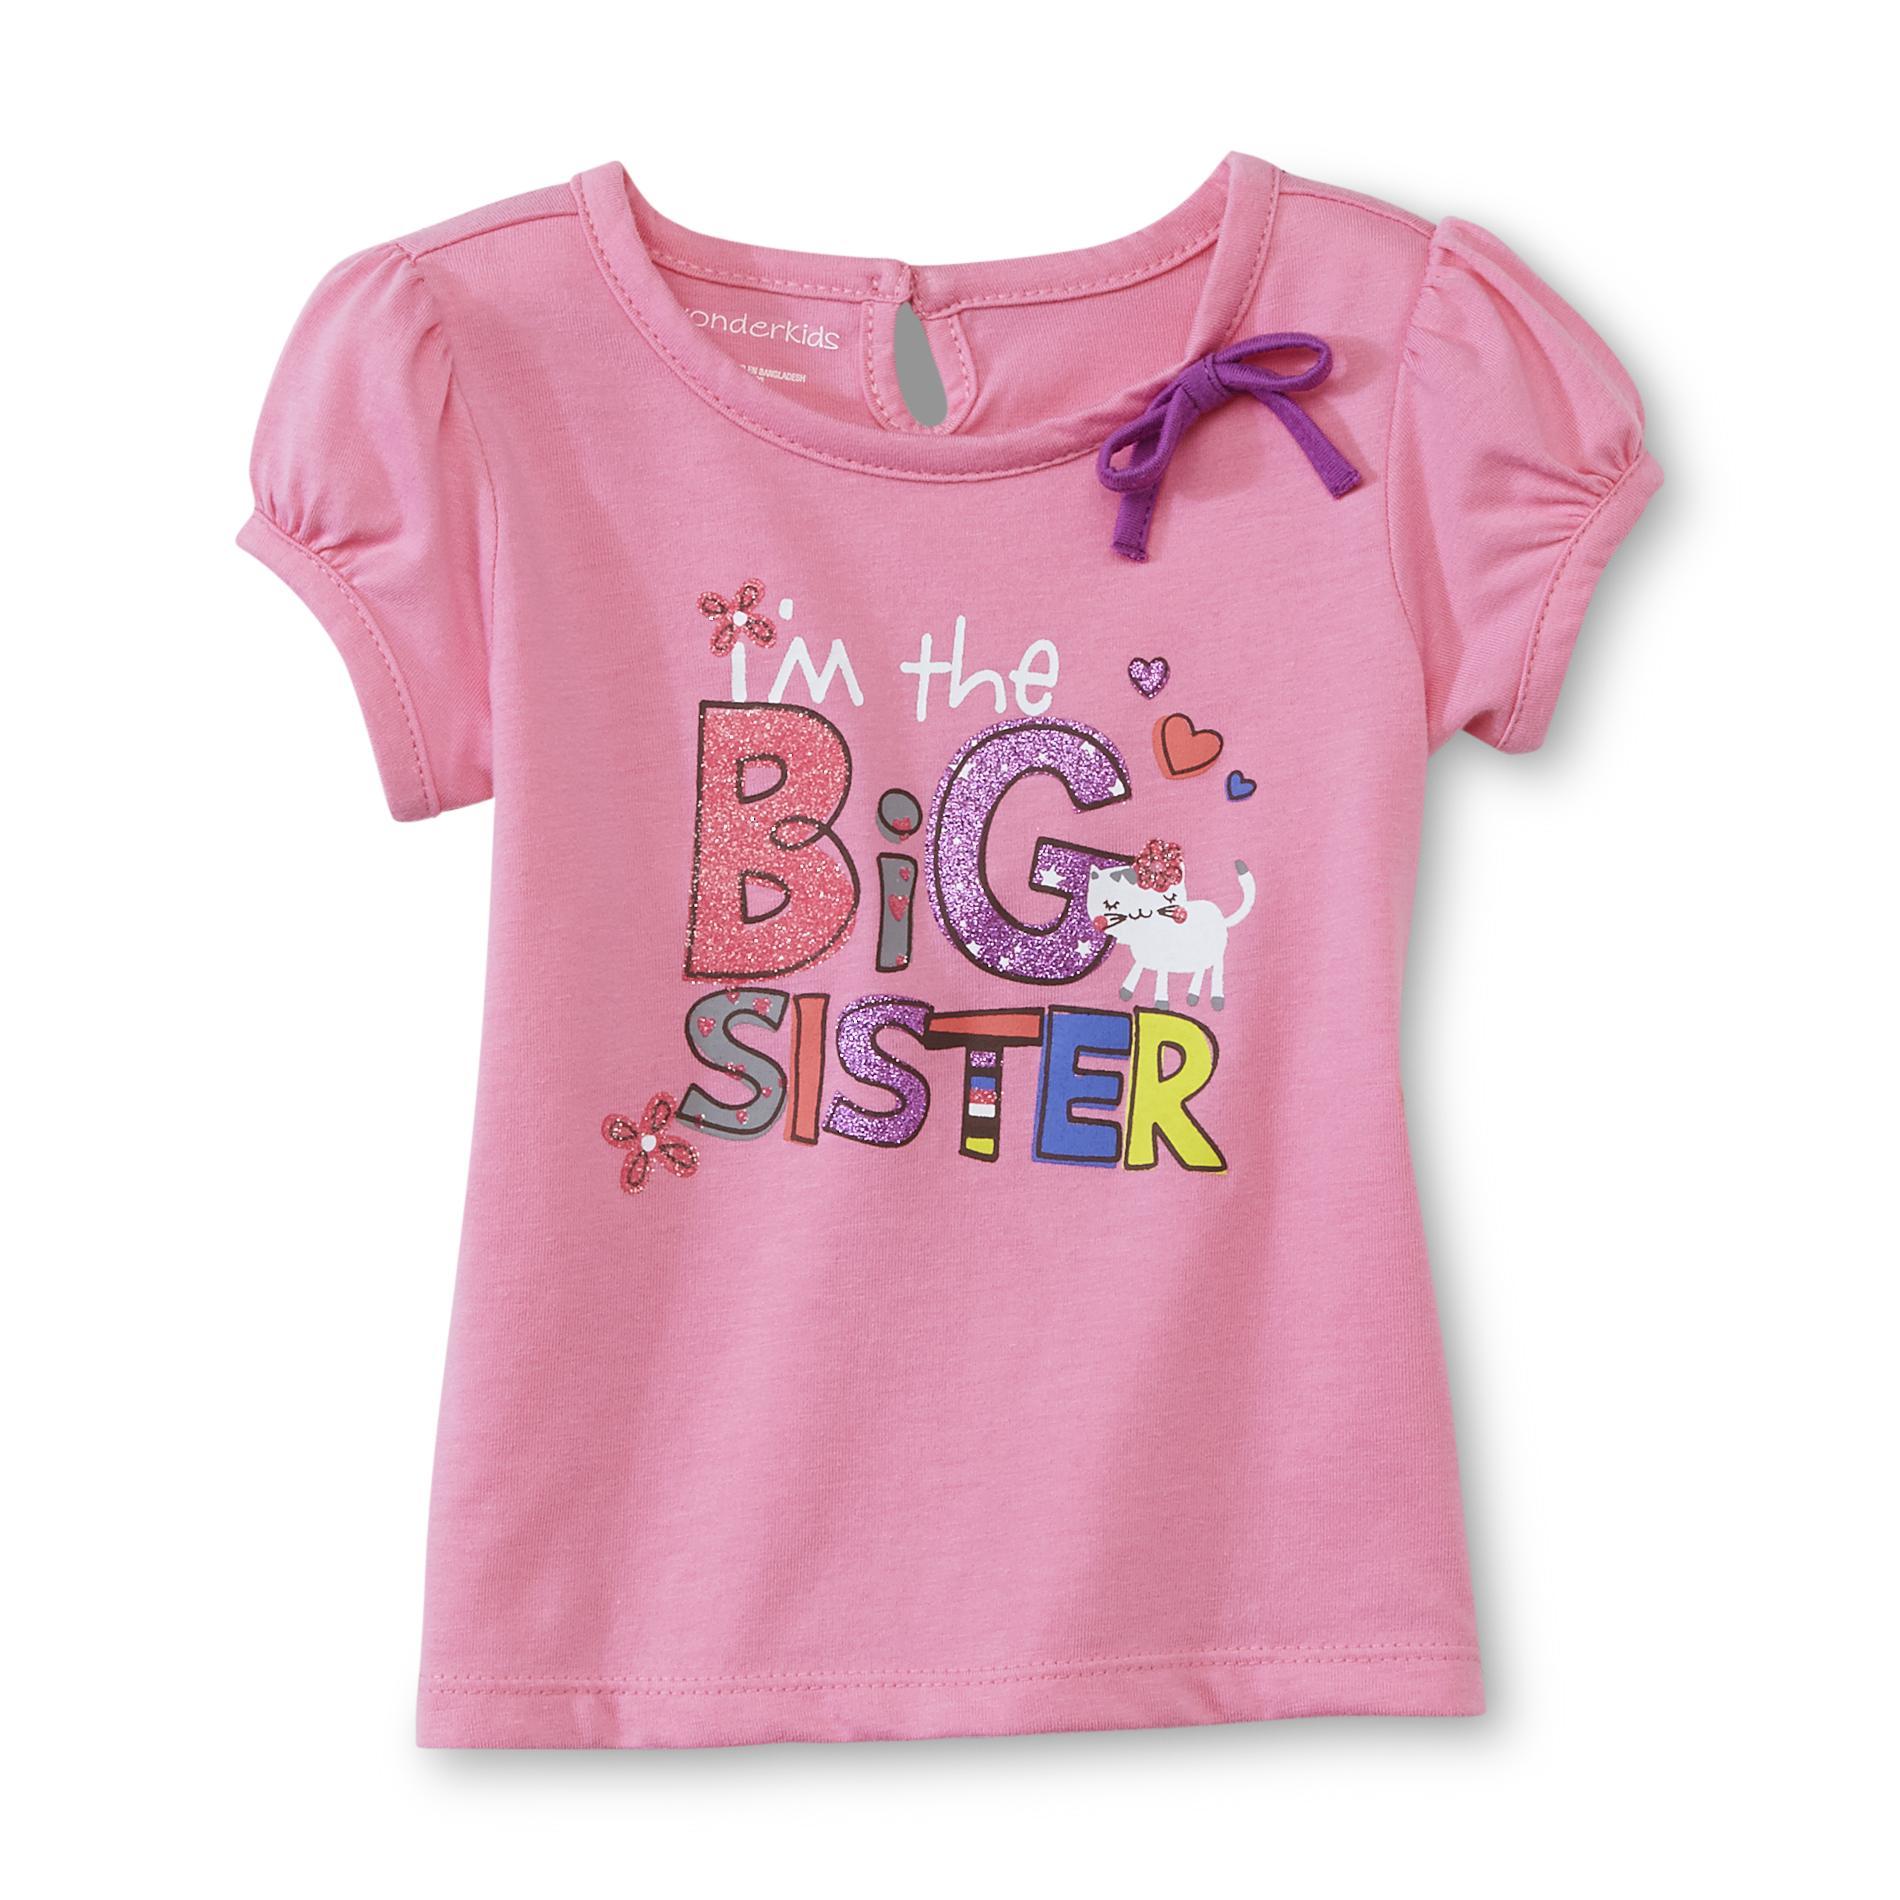 WonderKids Infant & Toddler Girl's Cap Sleeve T-Shirt - Big Sister